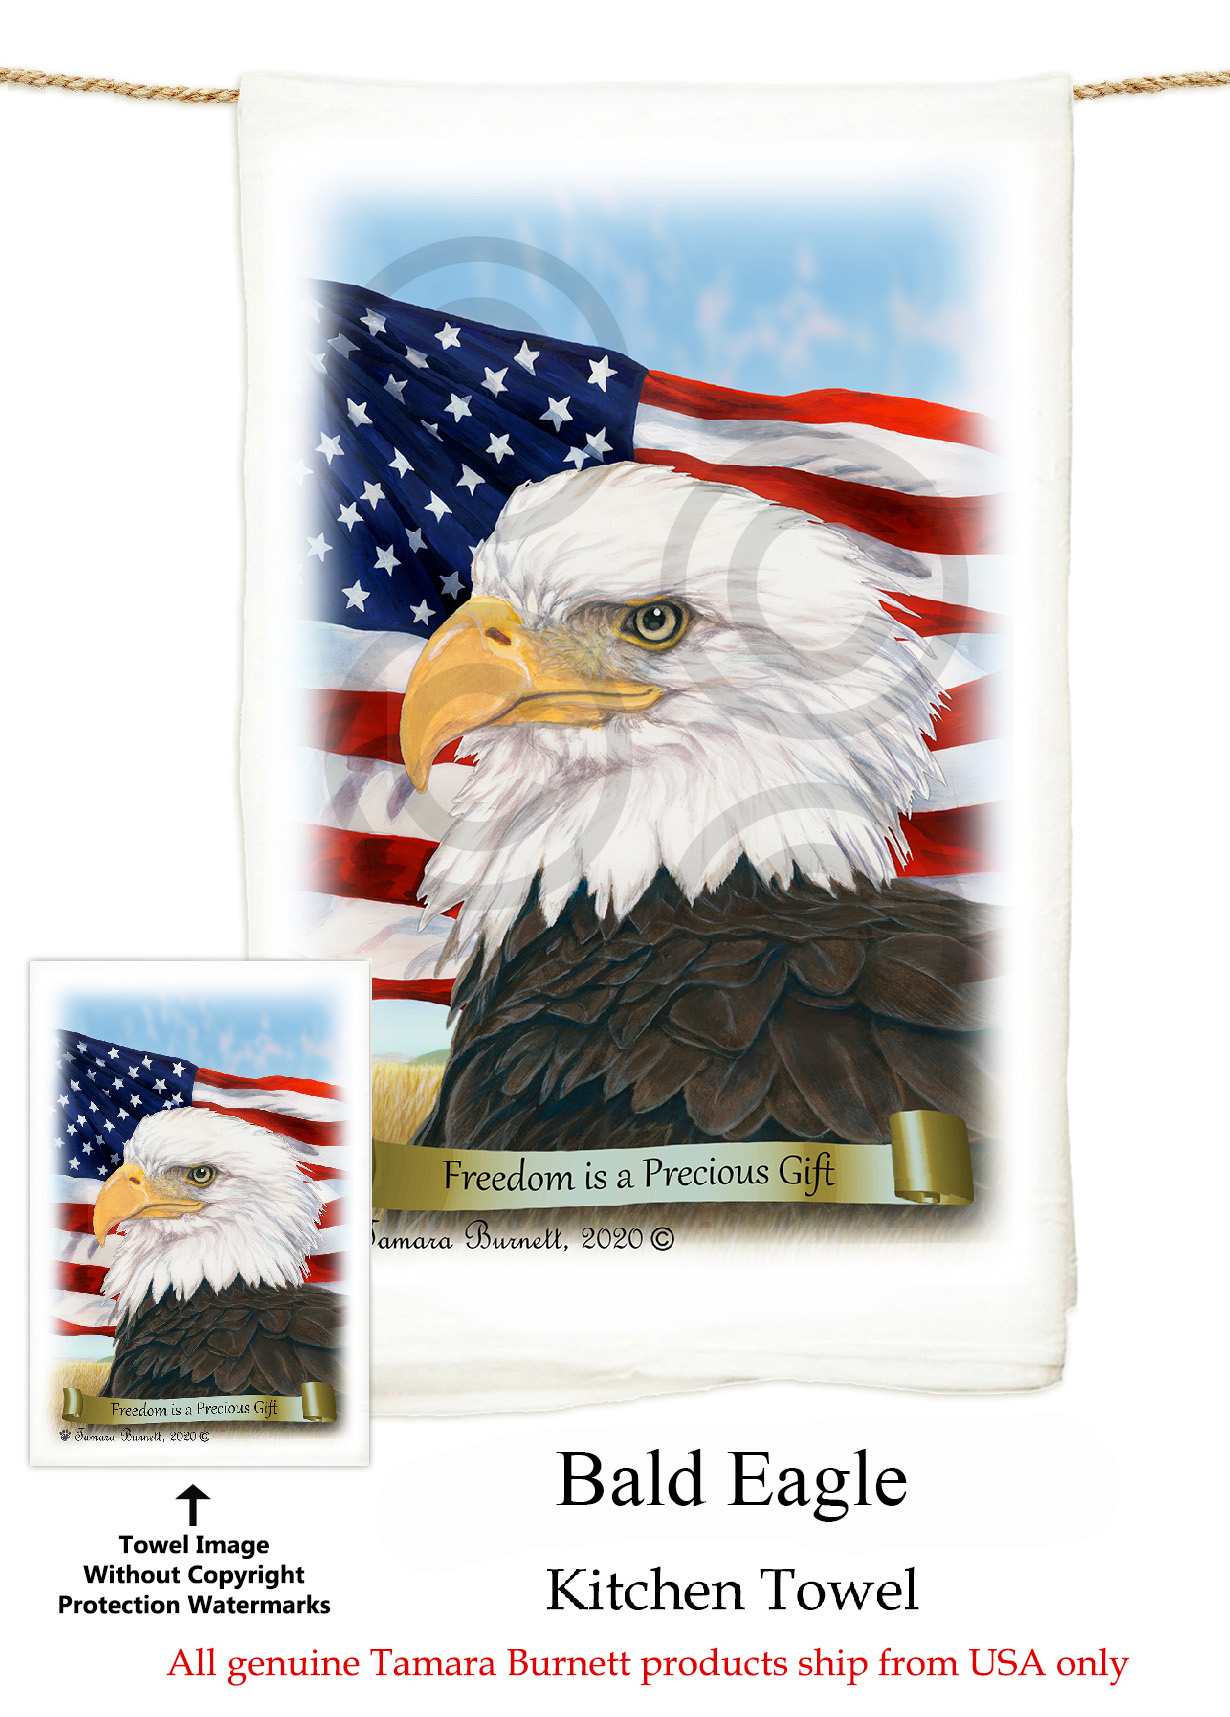 Bald Eagle With Flag - Flour Sack Towel image sized 1230 x 1717